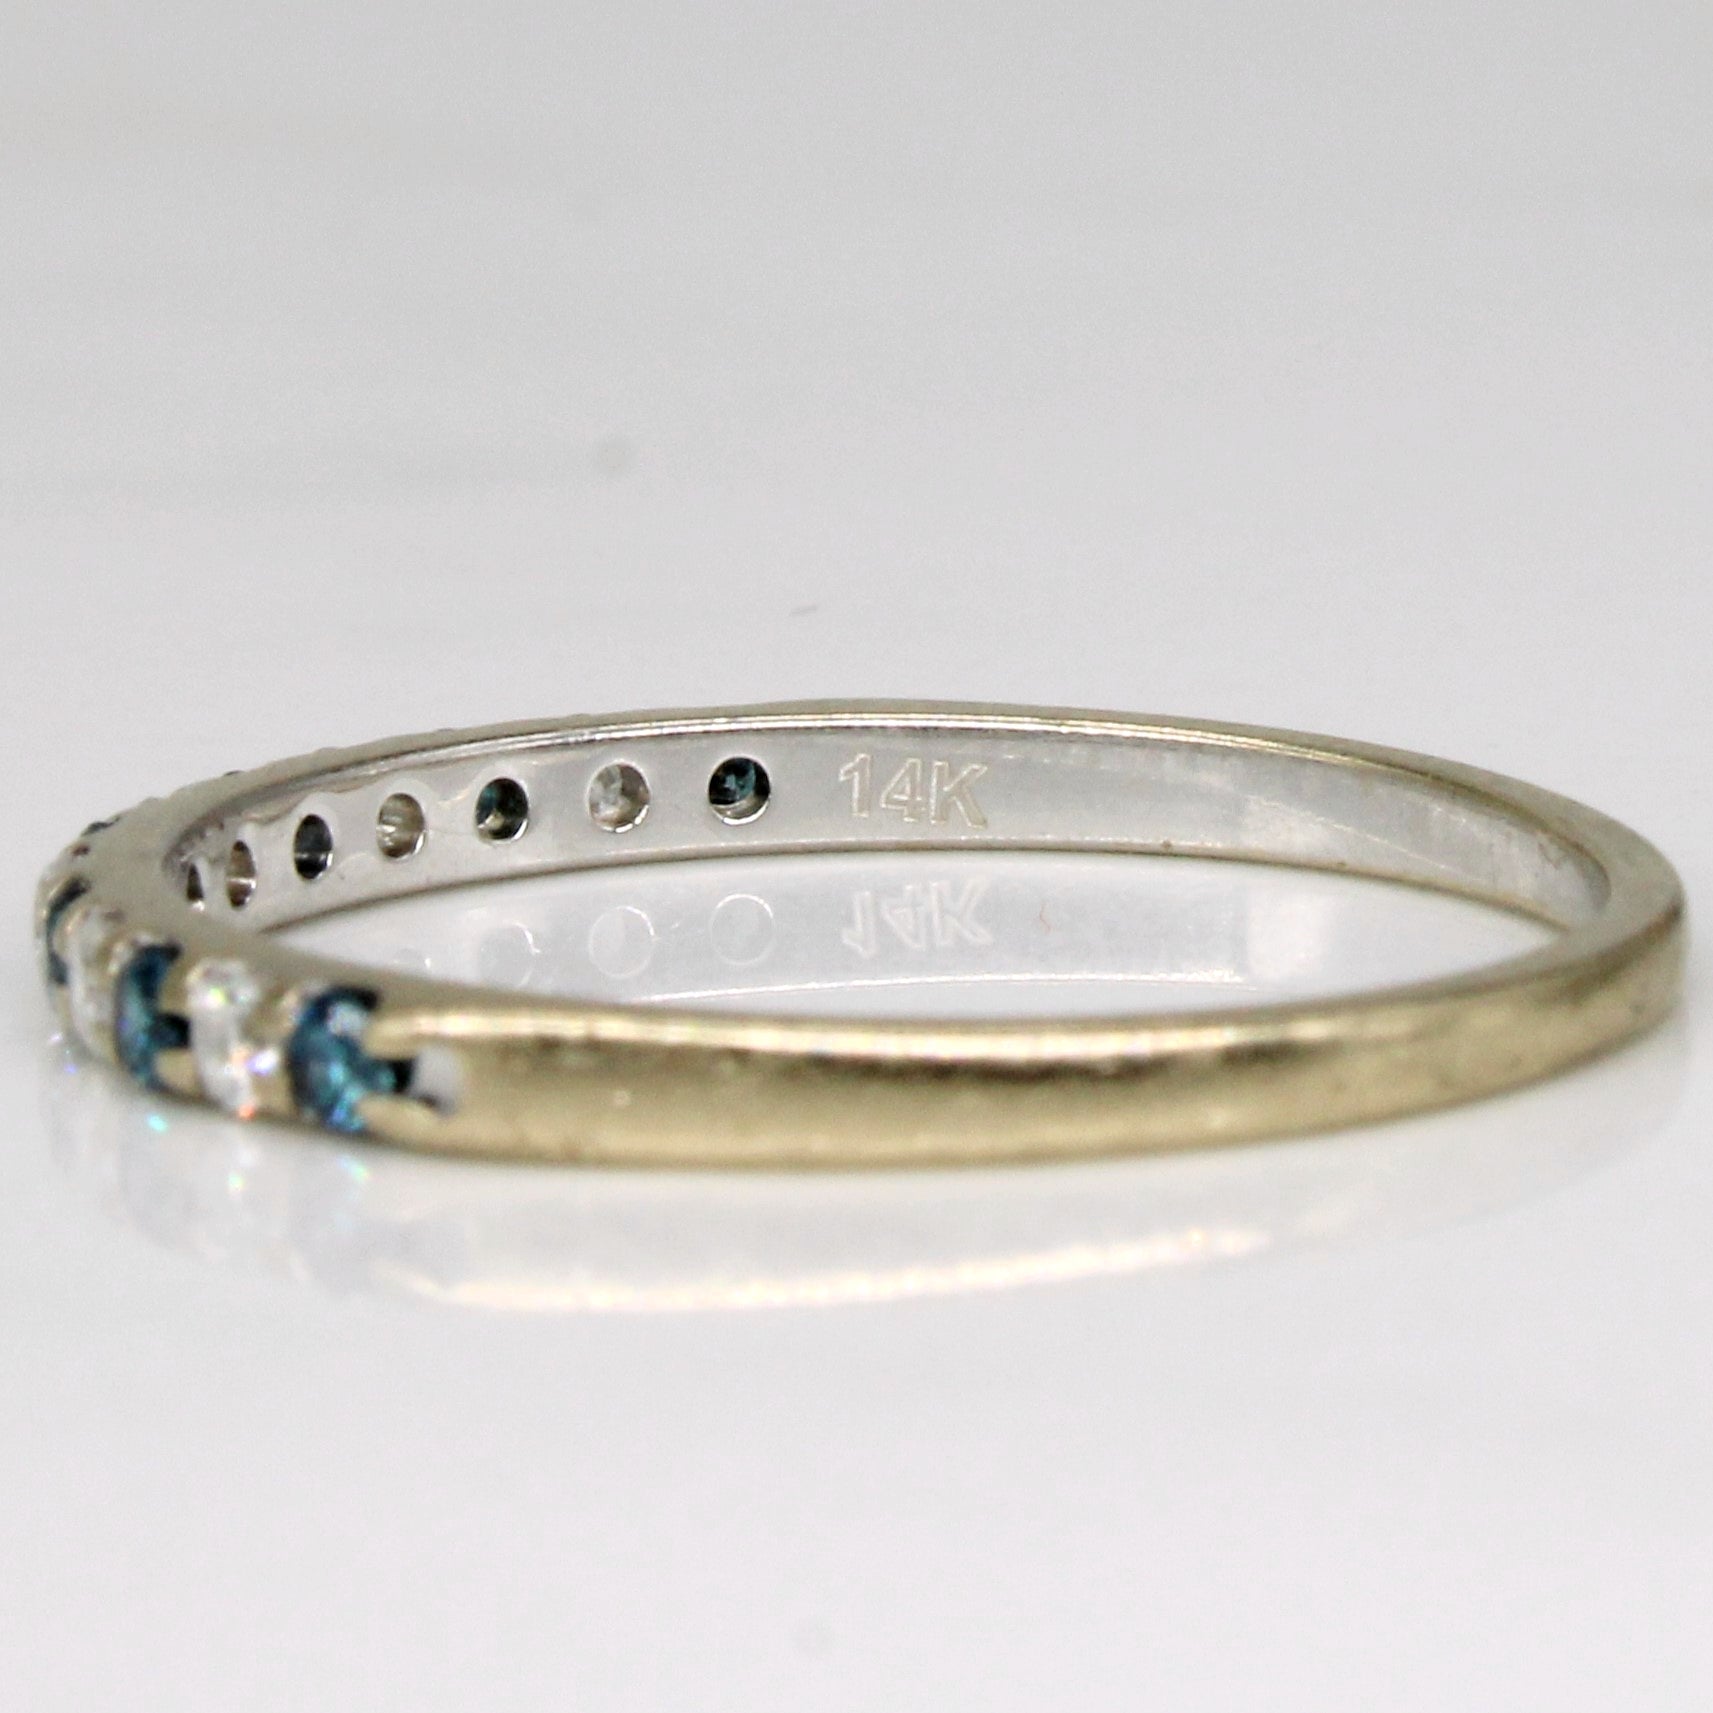 Blue & White Diamond Ring | 0.13ctw, 0.12ctw | SZ 6.75 |